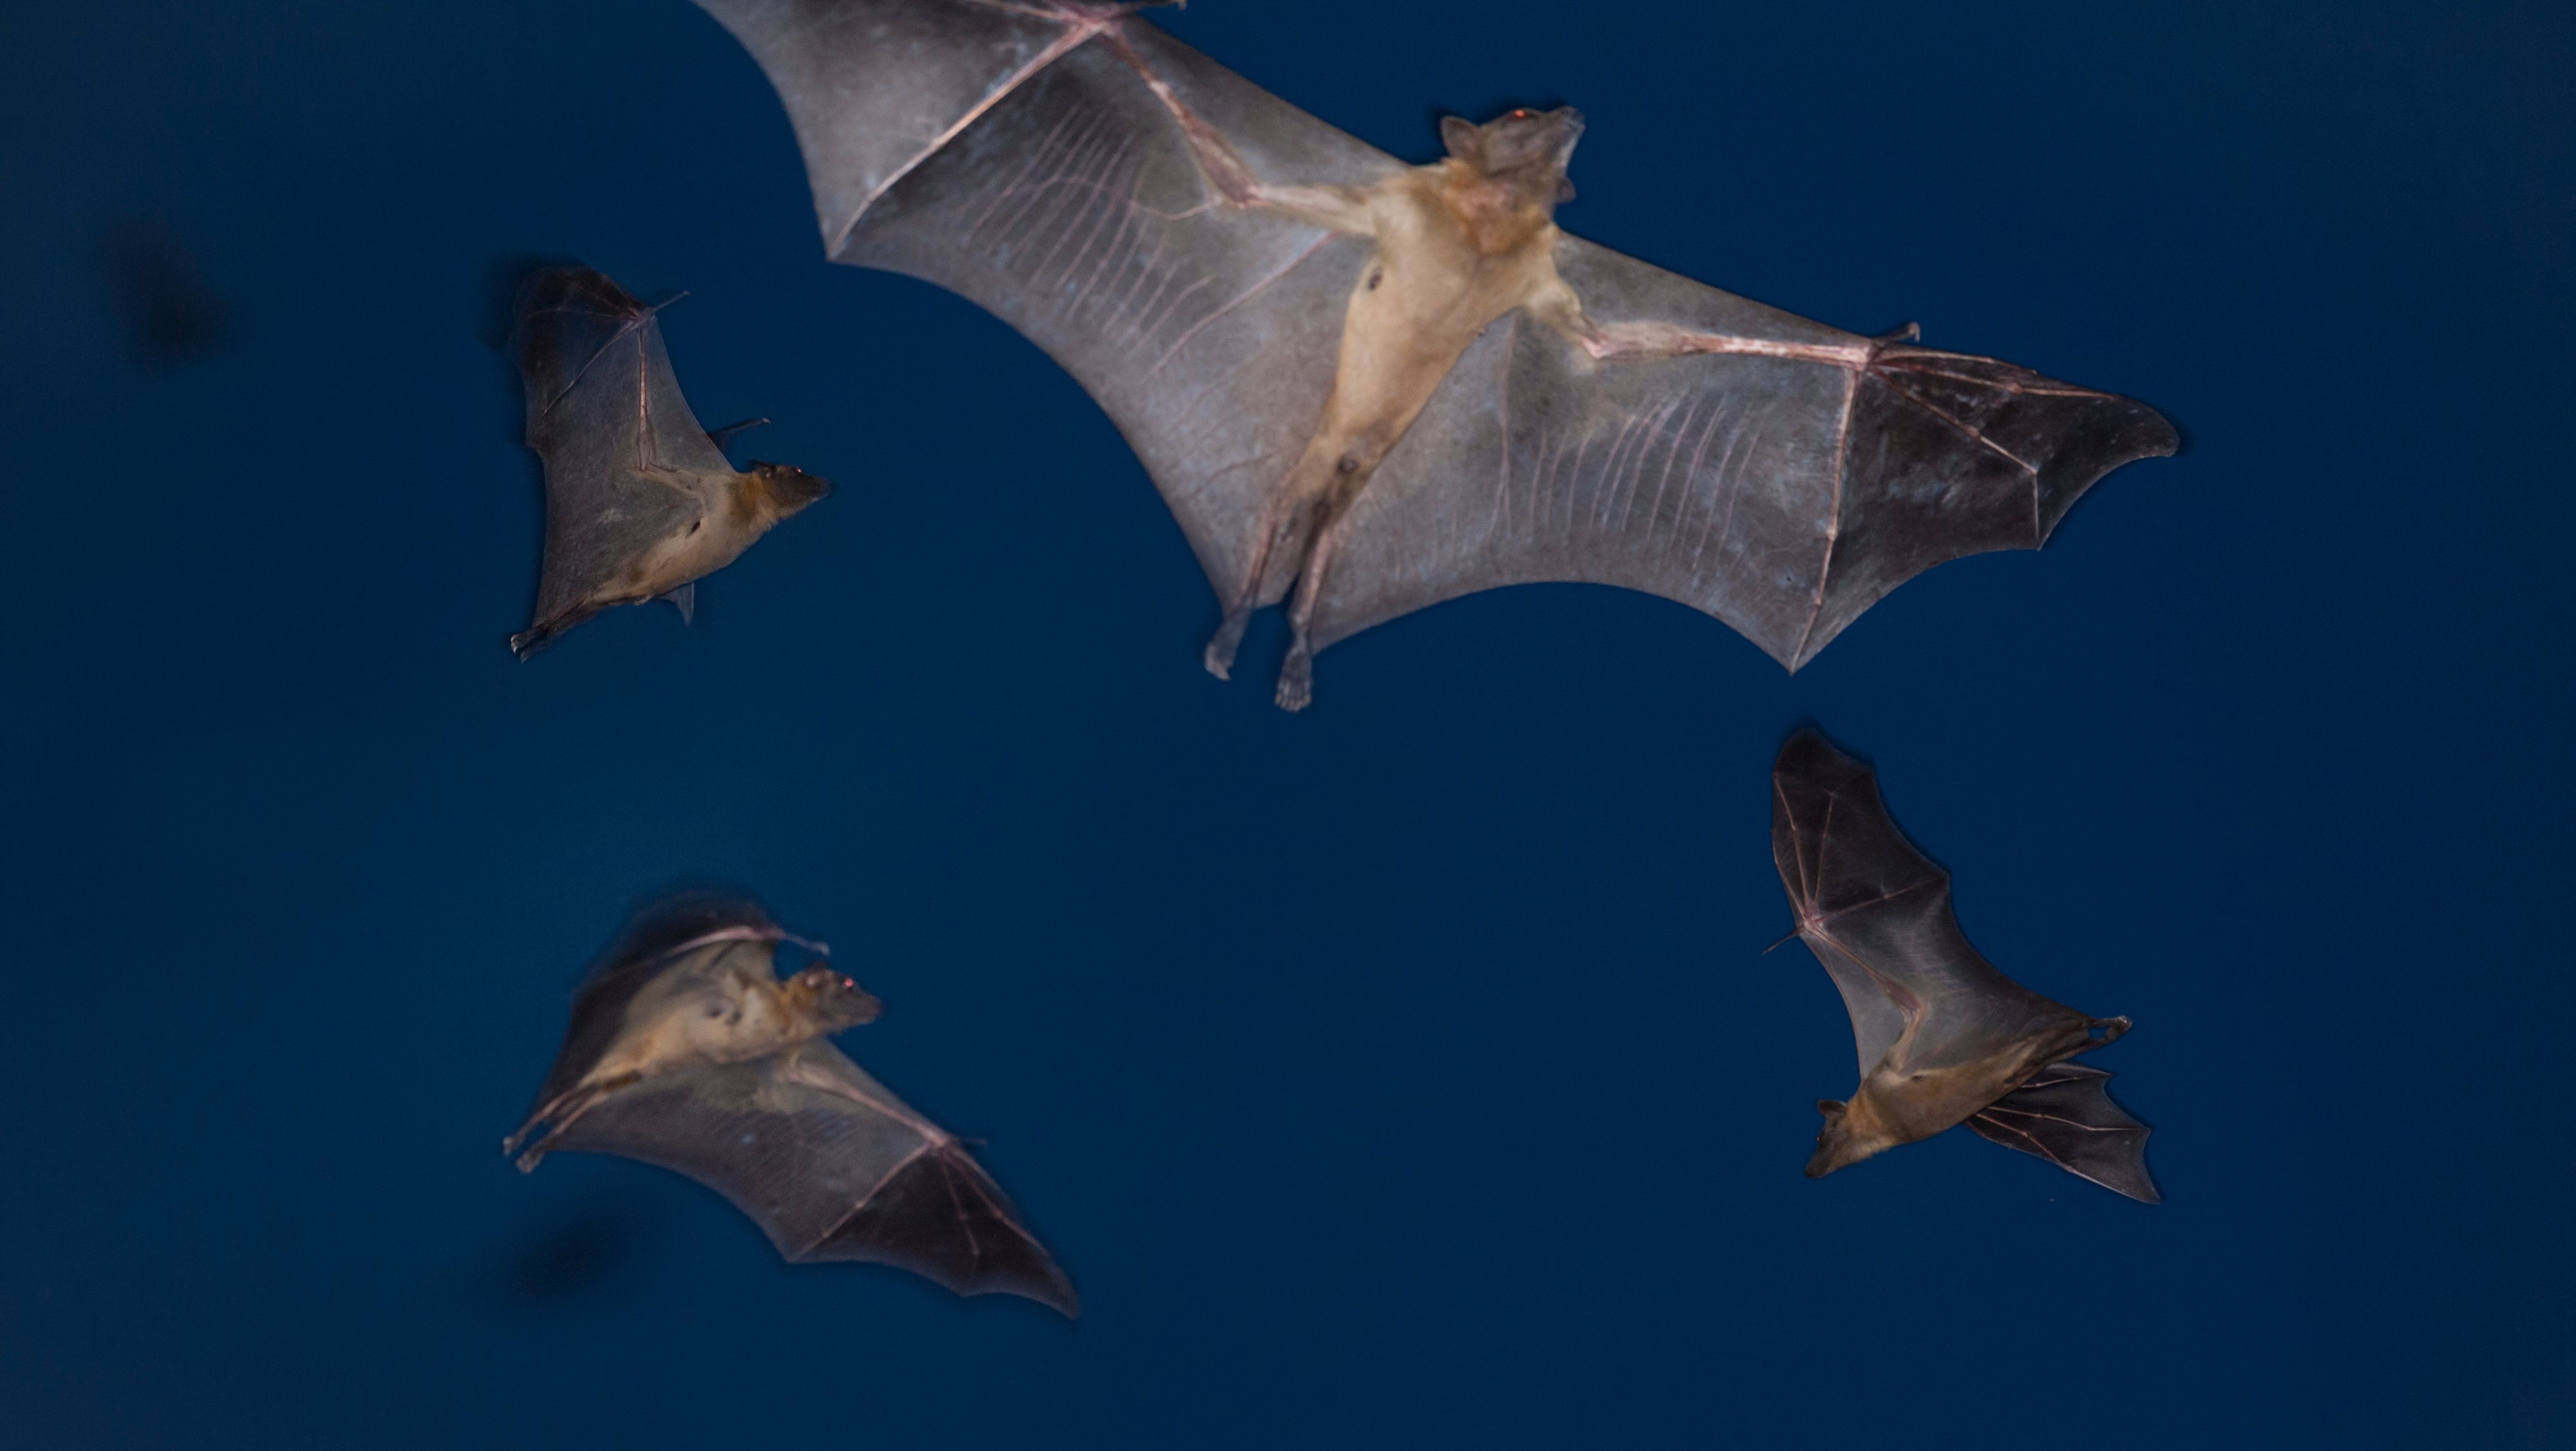 Annual Bat Migration